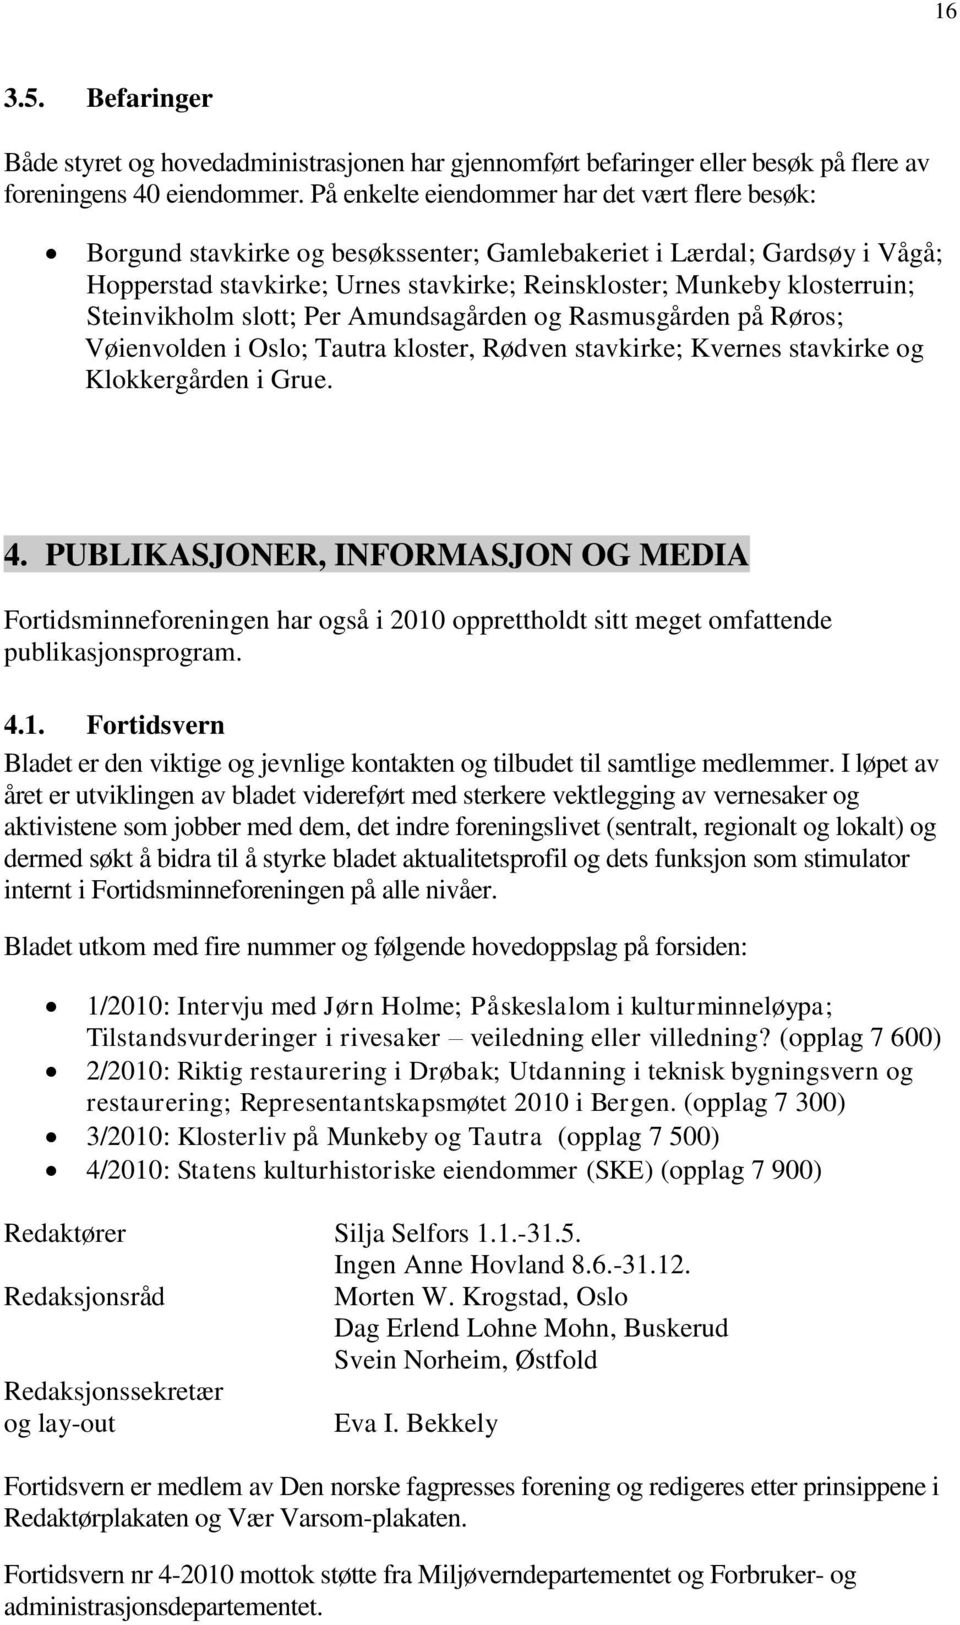 Steinvikholm slott; Per Amundsagården og Rasmusgården på Røros; Vøienvolden i Oslo; Tautra kloster, Rødven stavkirke; Kvernes stavkirke og Klokkergården i Grue. 4.